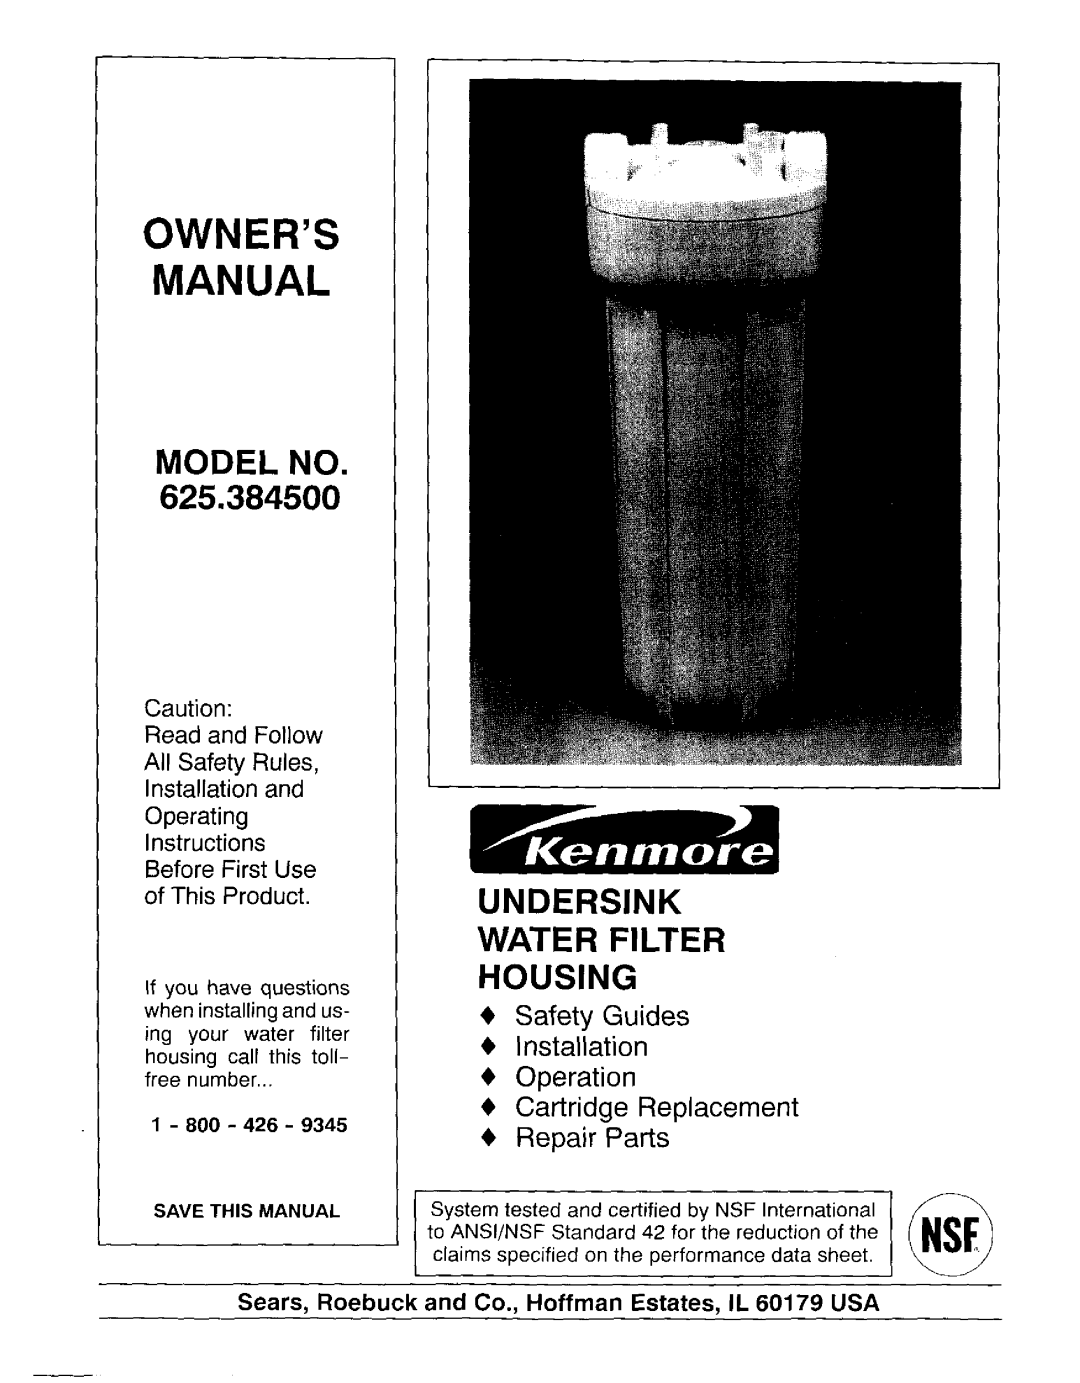 Kenmore 625.3845 owner manual Owners, Manual, Undersink, Housing, Model No, Water Filter 